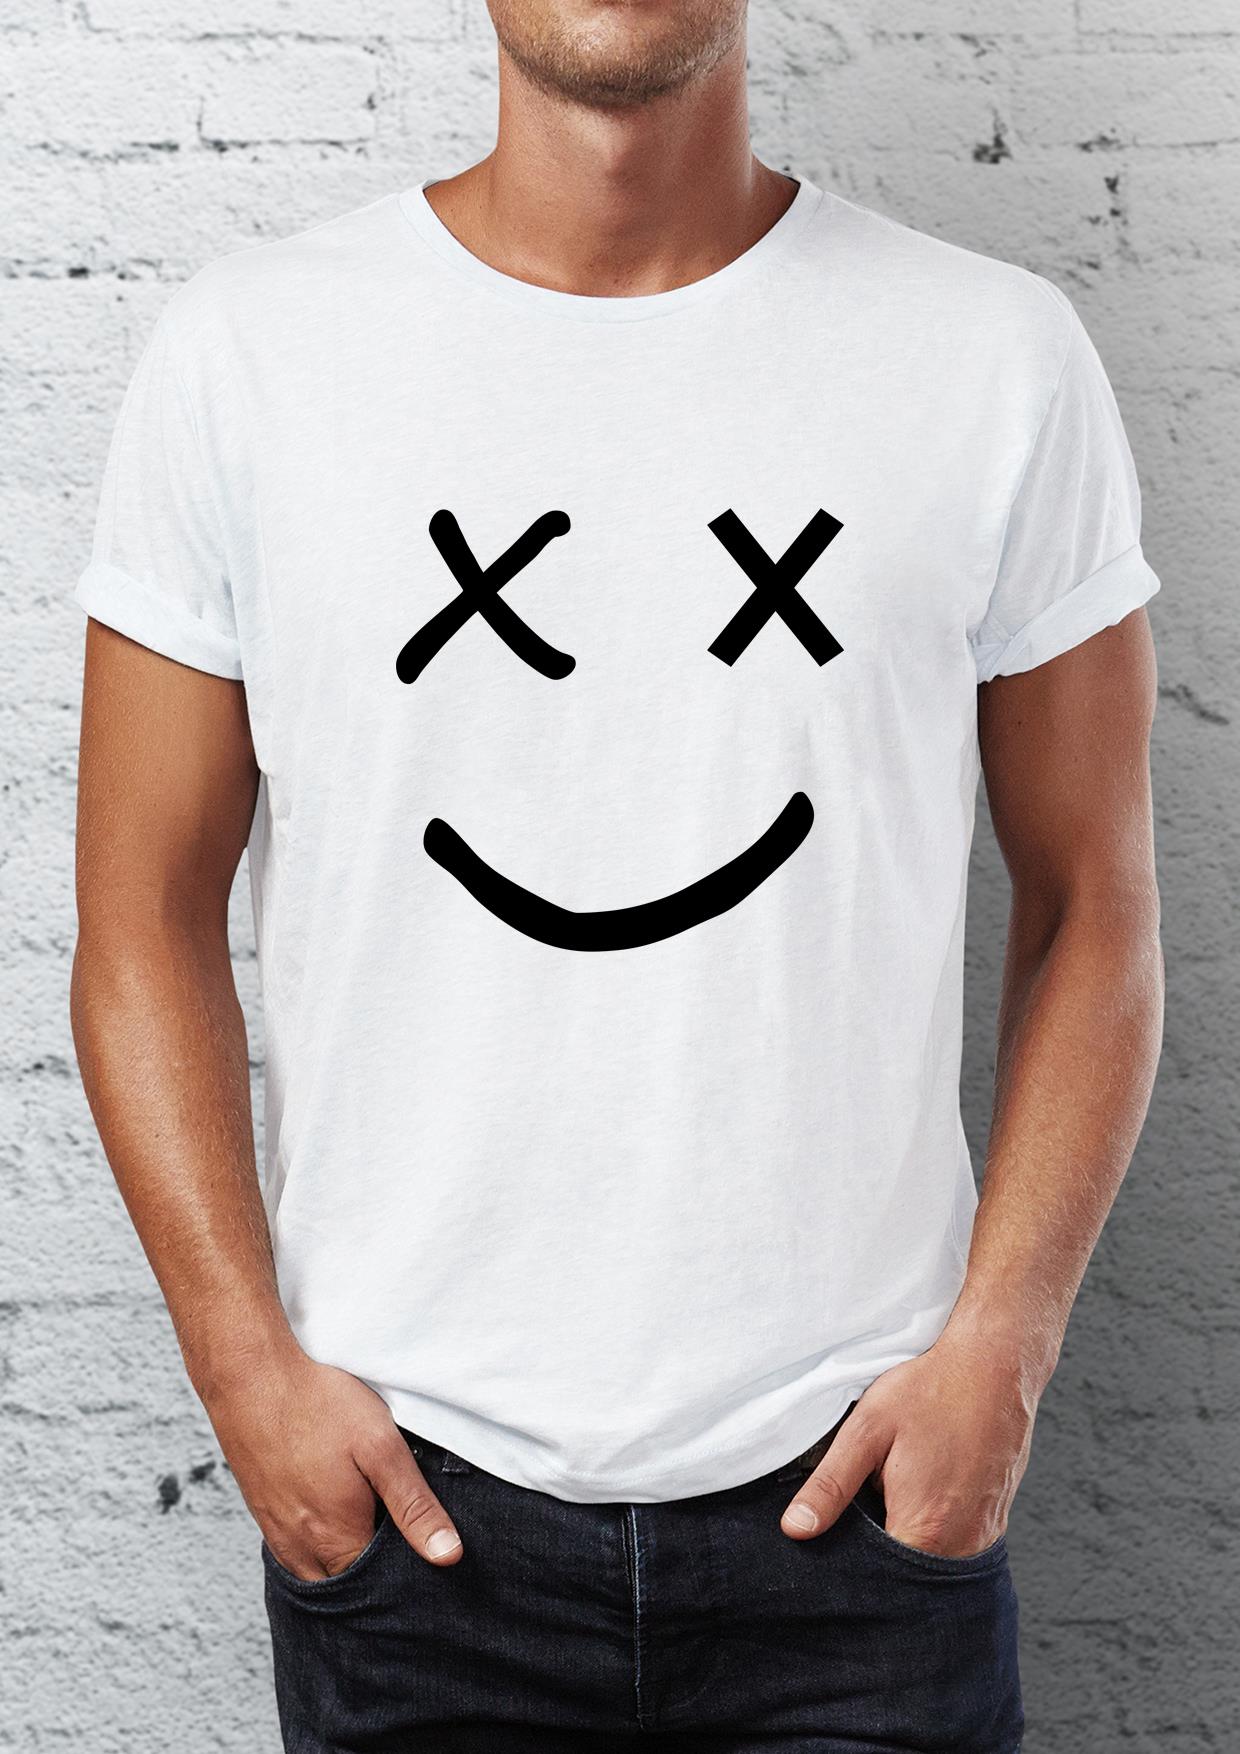 Emoji graphic printed Crew Neck men's t -shirt